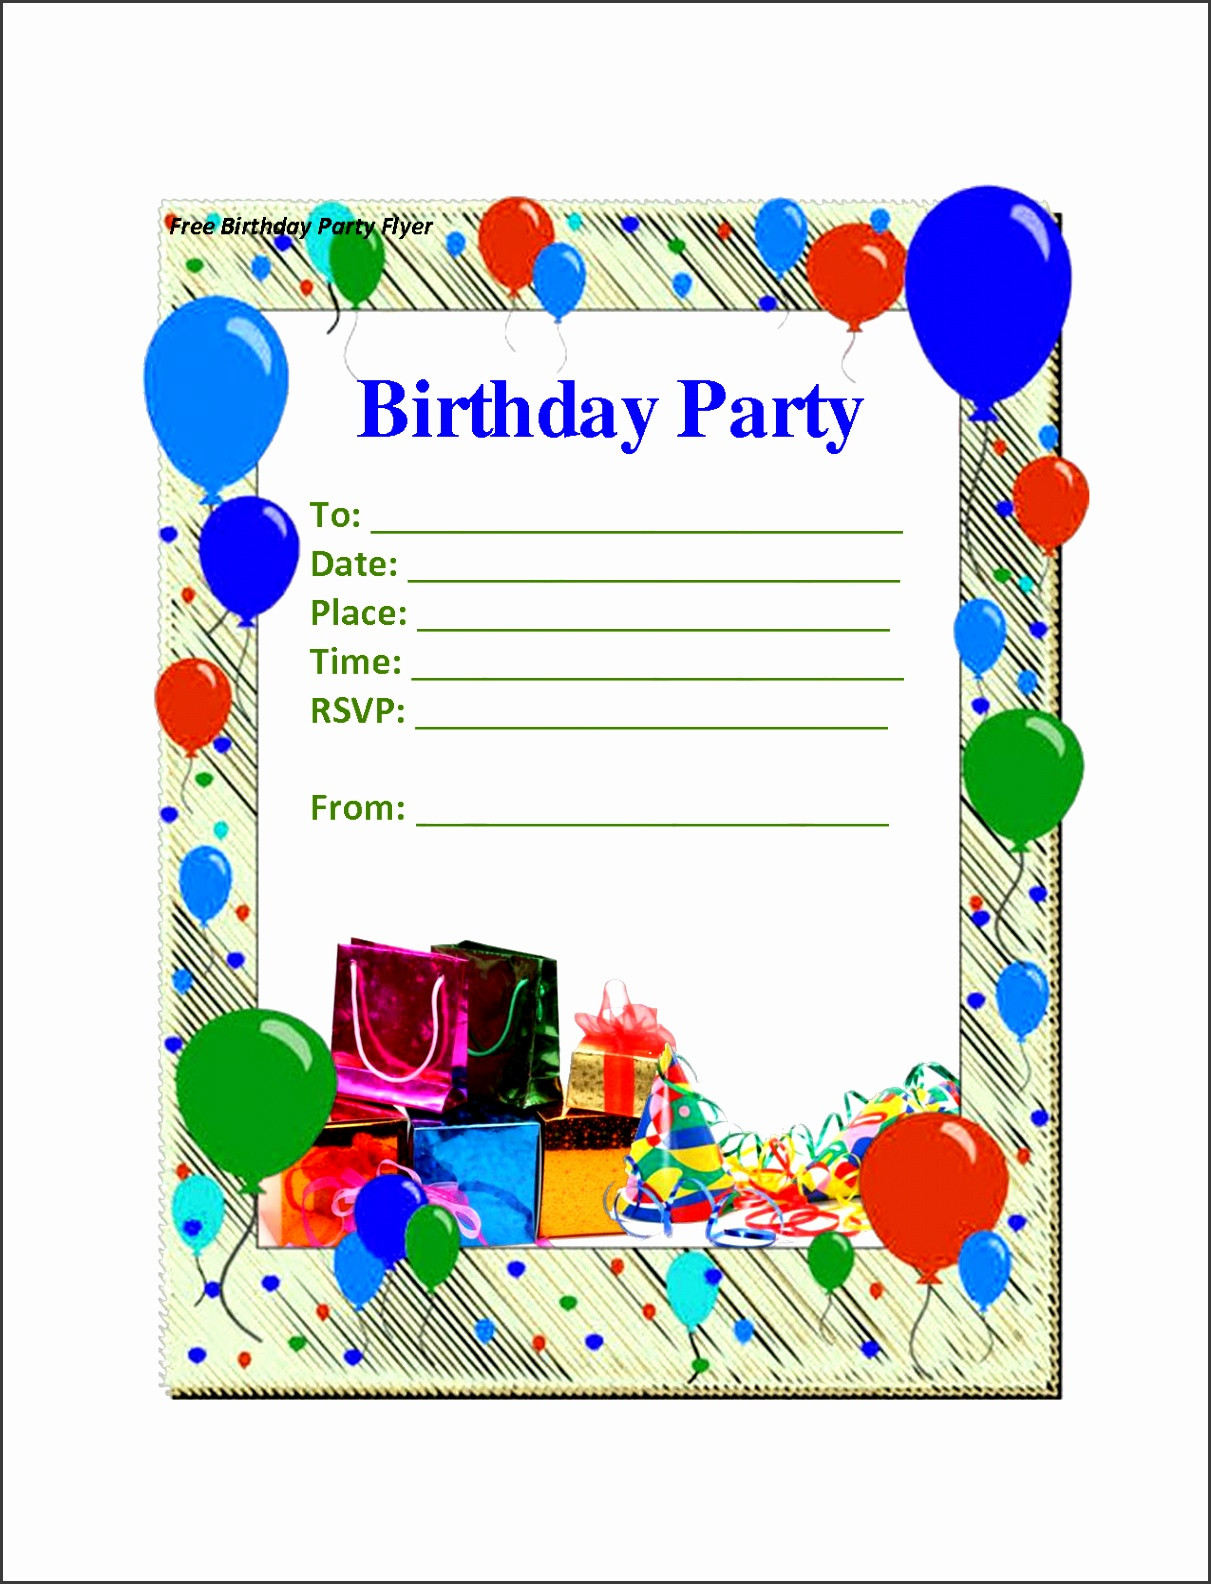 Microsoft Word Birthday Card Template
 9 Microsoft fice Birthday Card Templates